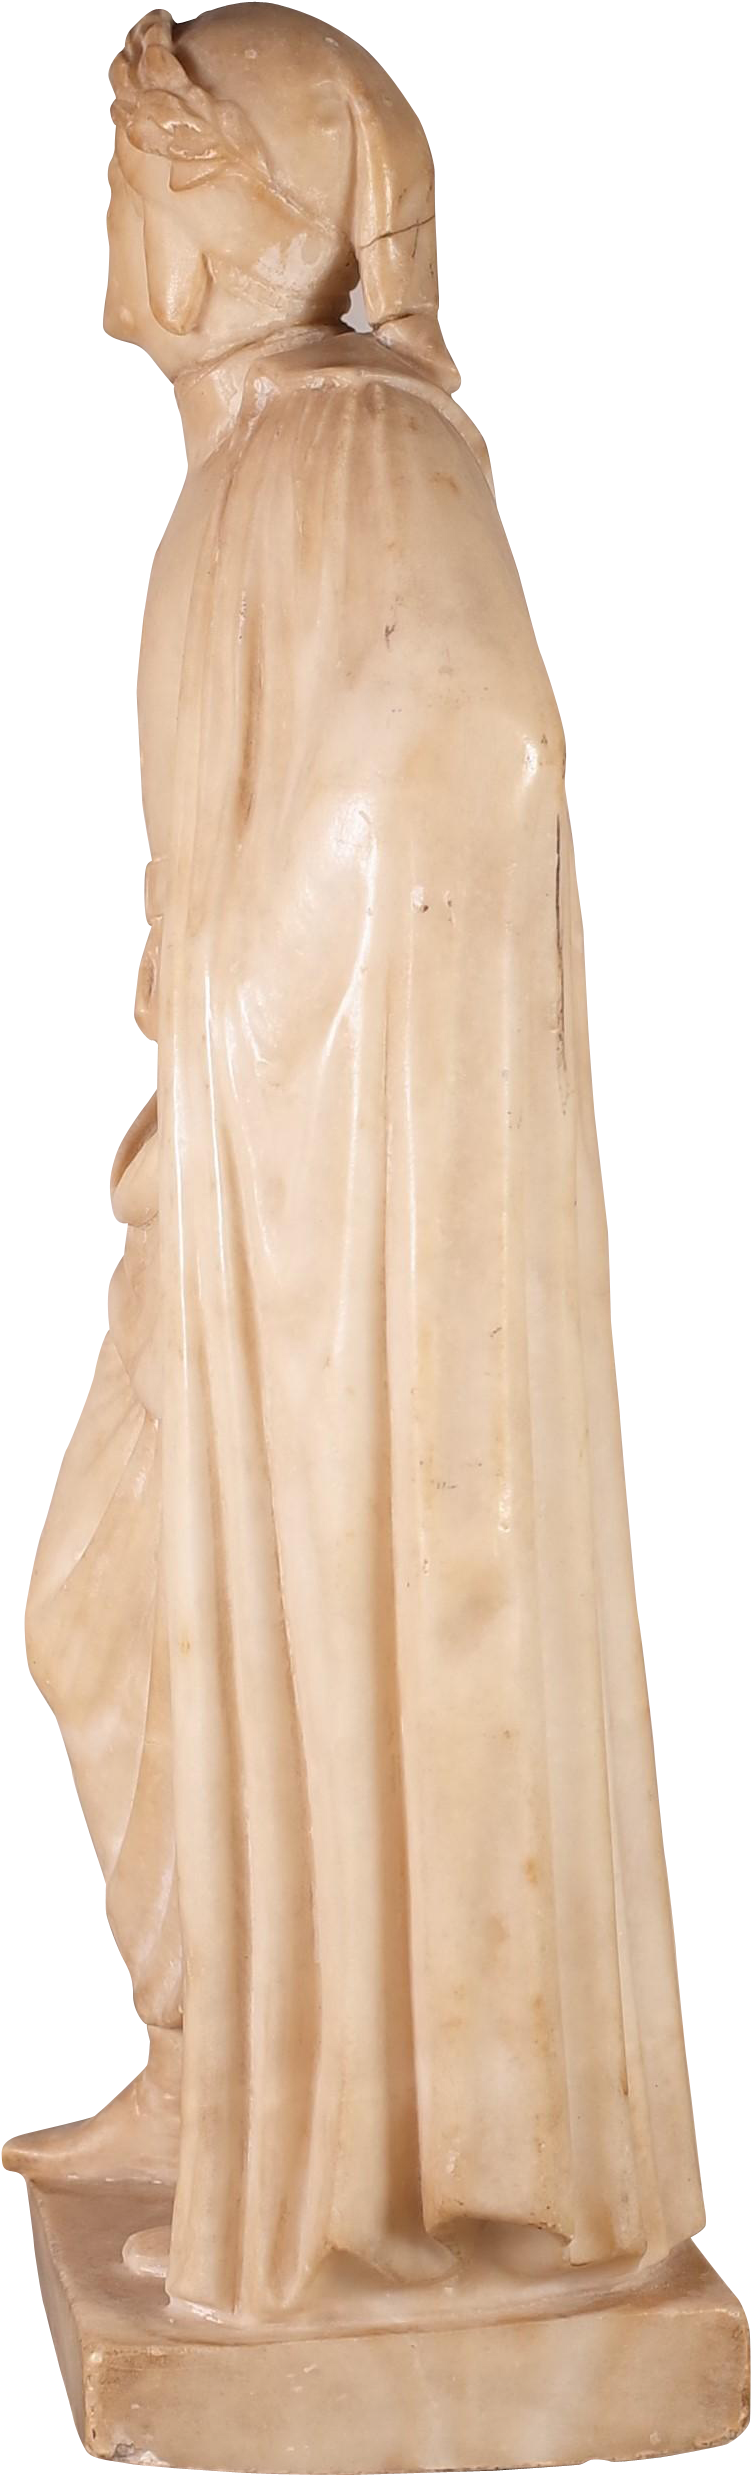 Alabaster Model Of Classical Roman Figure In Cloak - Statue (2130x3216), Png Download